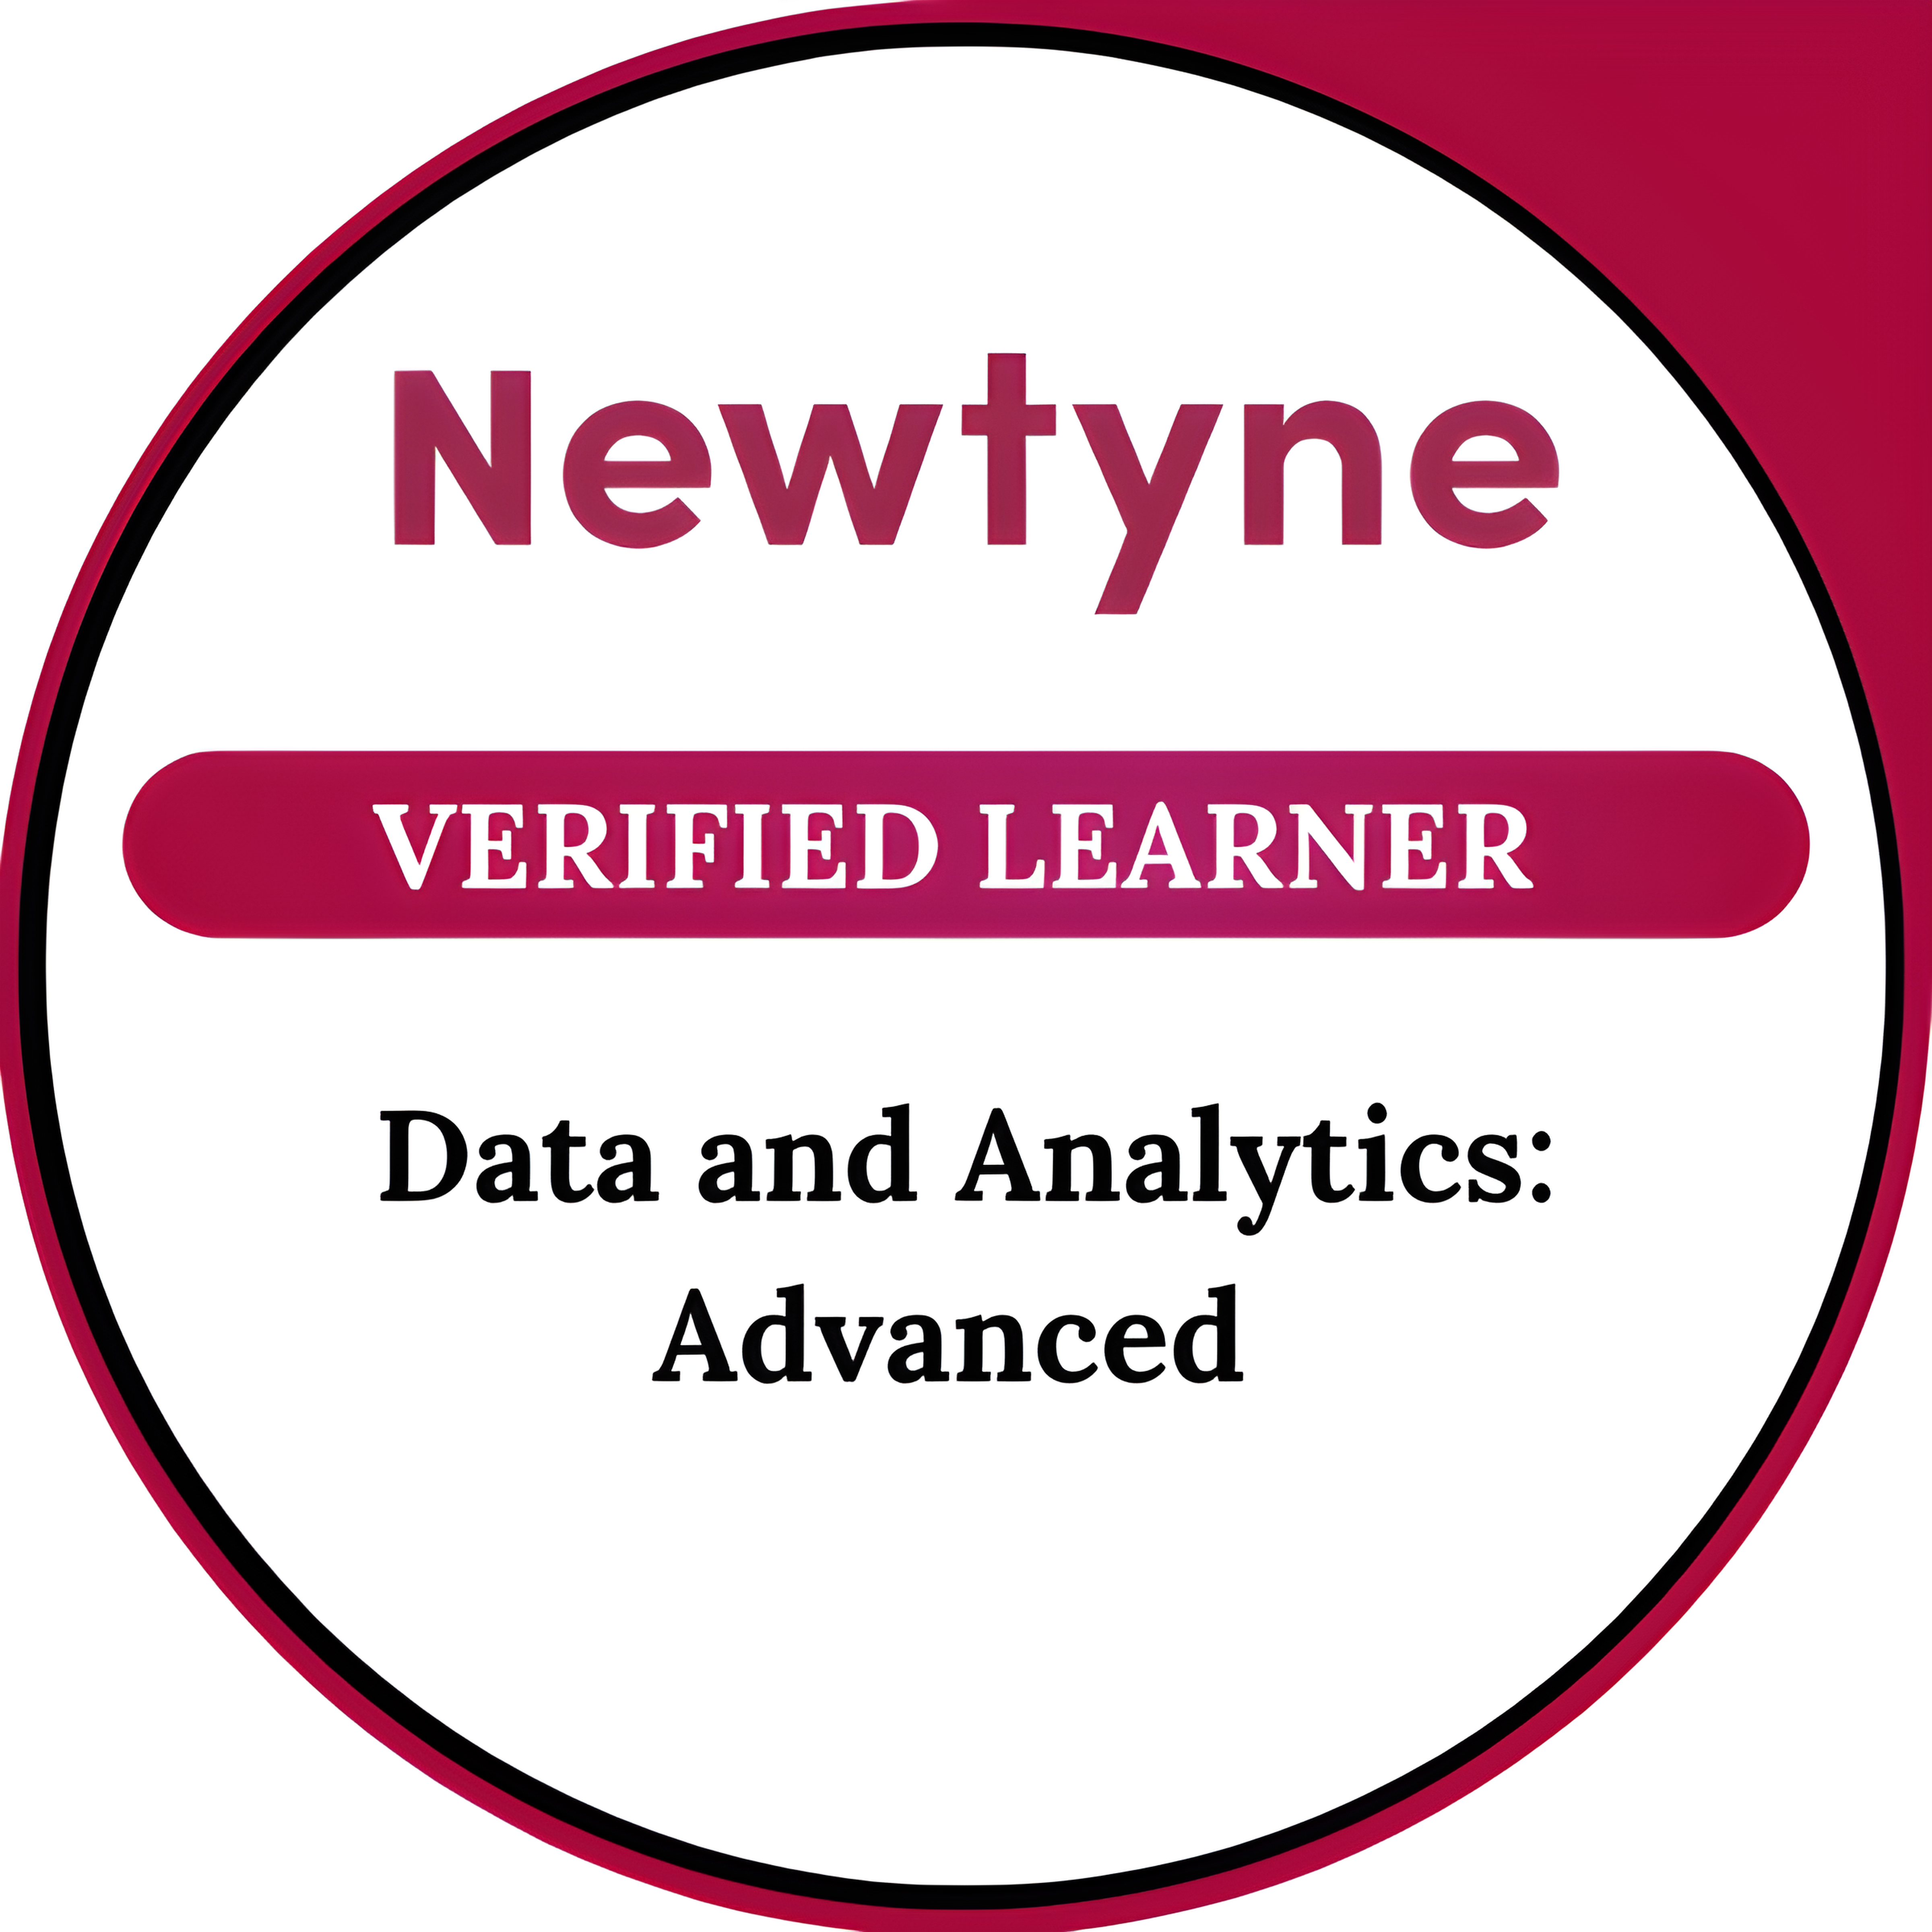 Newtyne verified learner data and analytics advanced logo